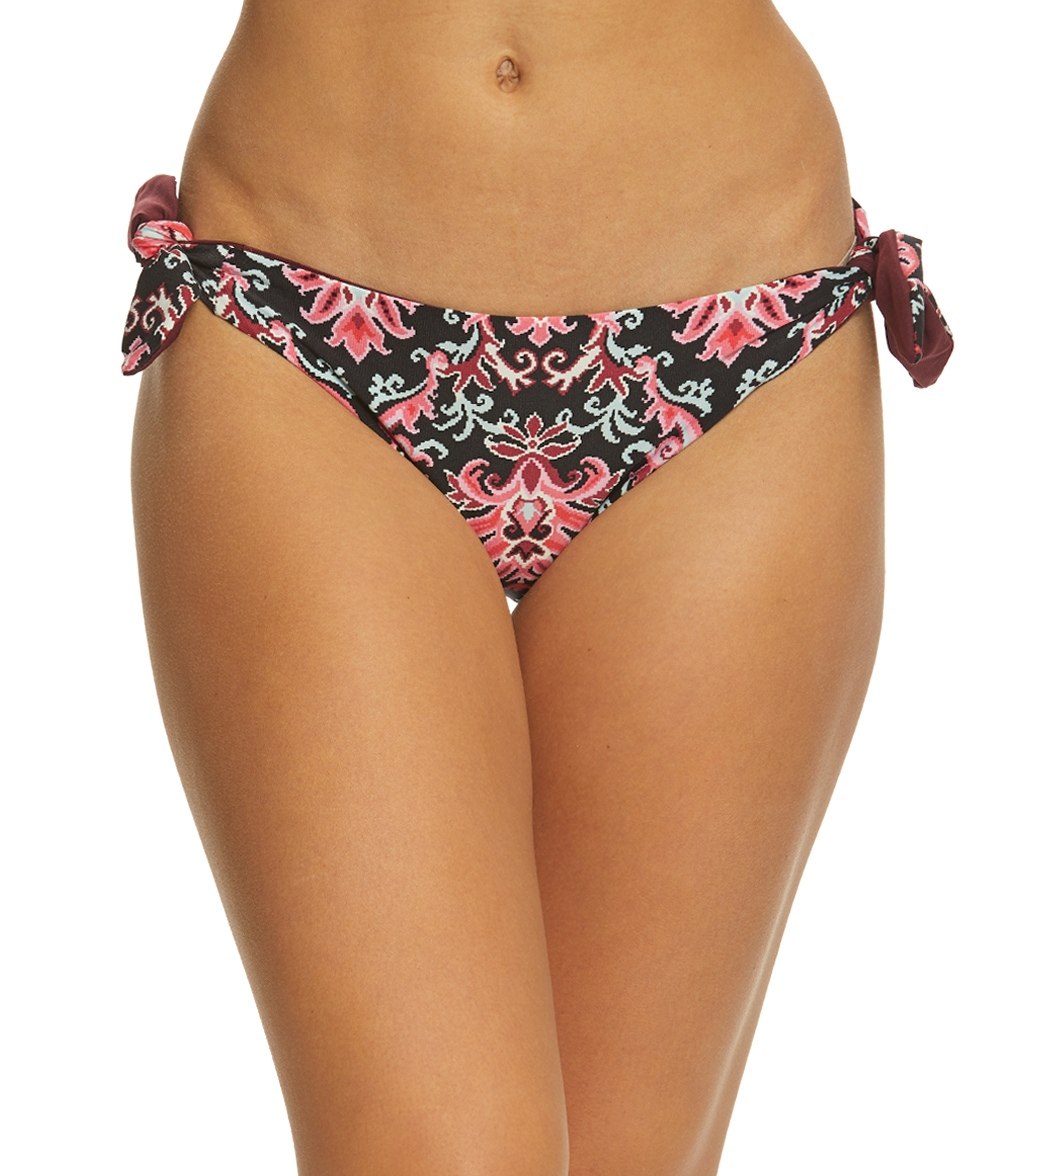 Kate Spade New York Oasis Beach Reversible Bikini Bottom - Black Xl - Swimoutlet.com